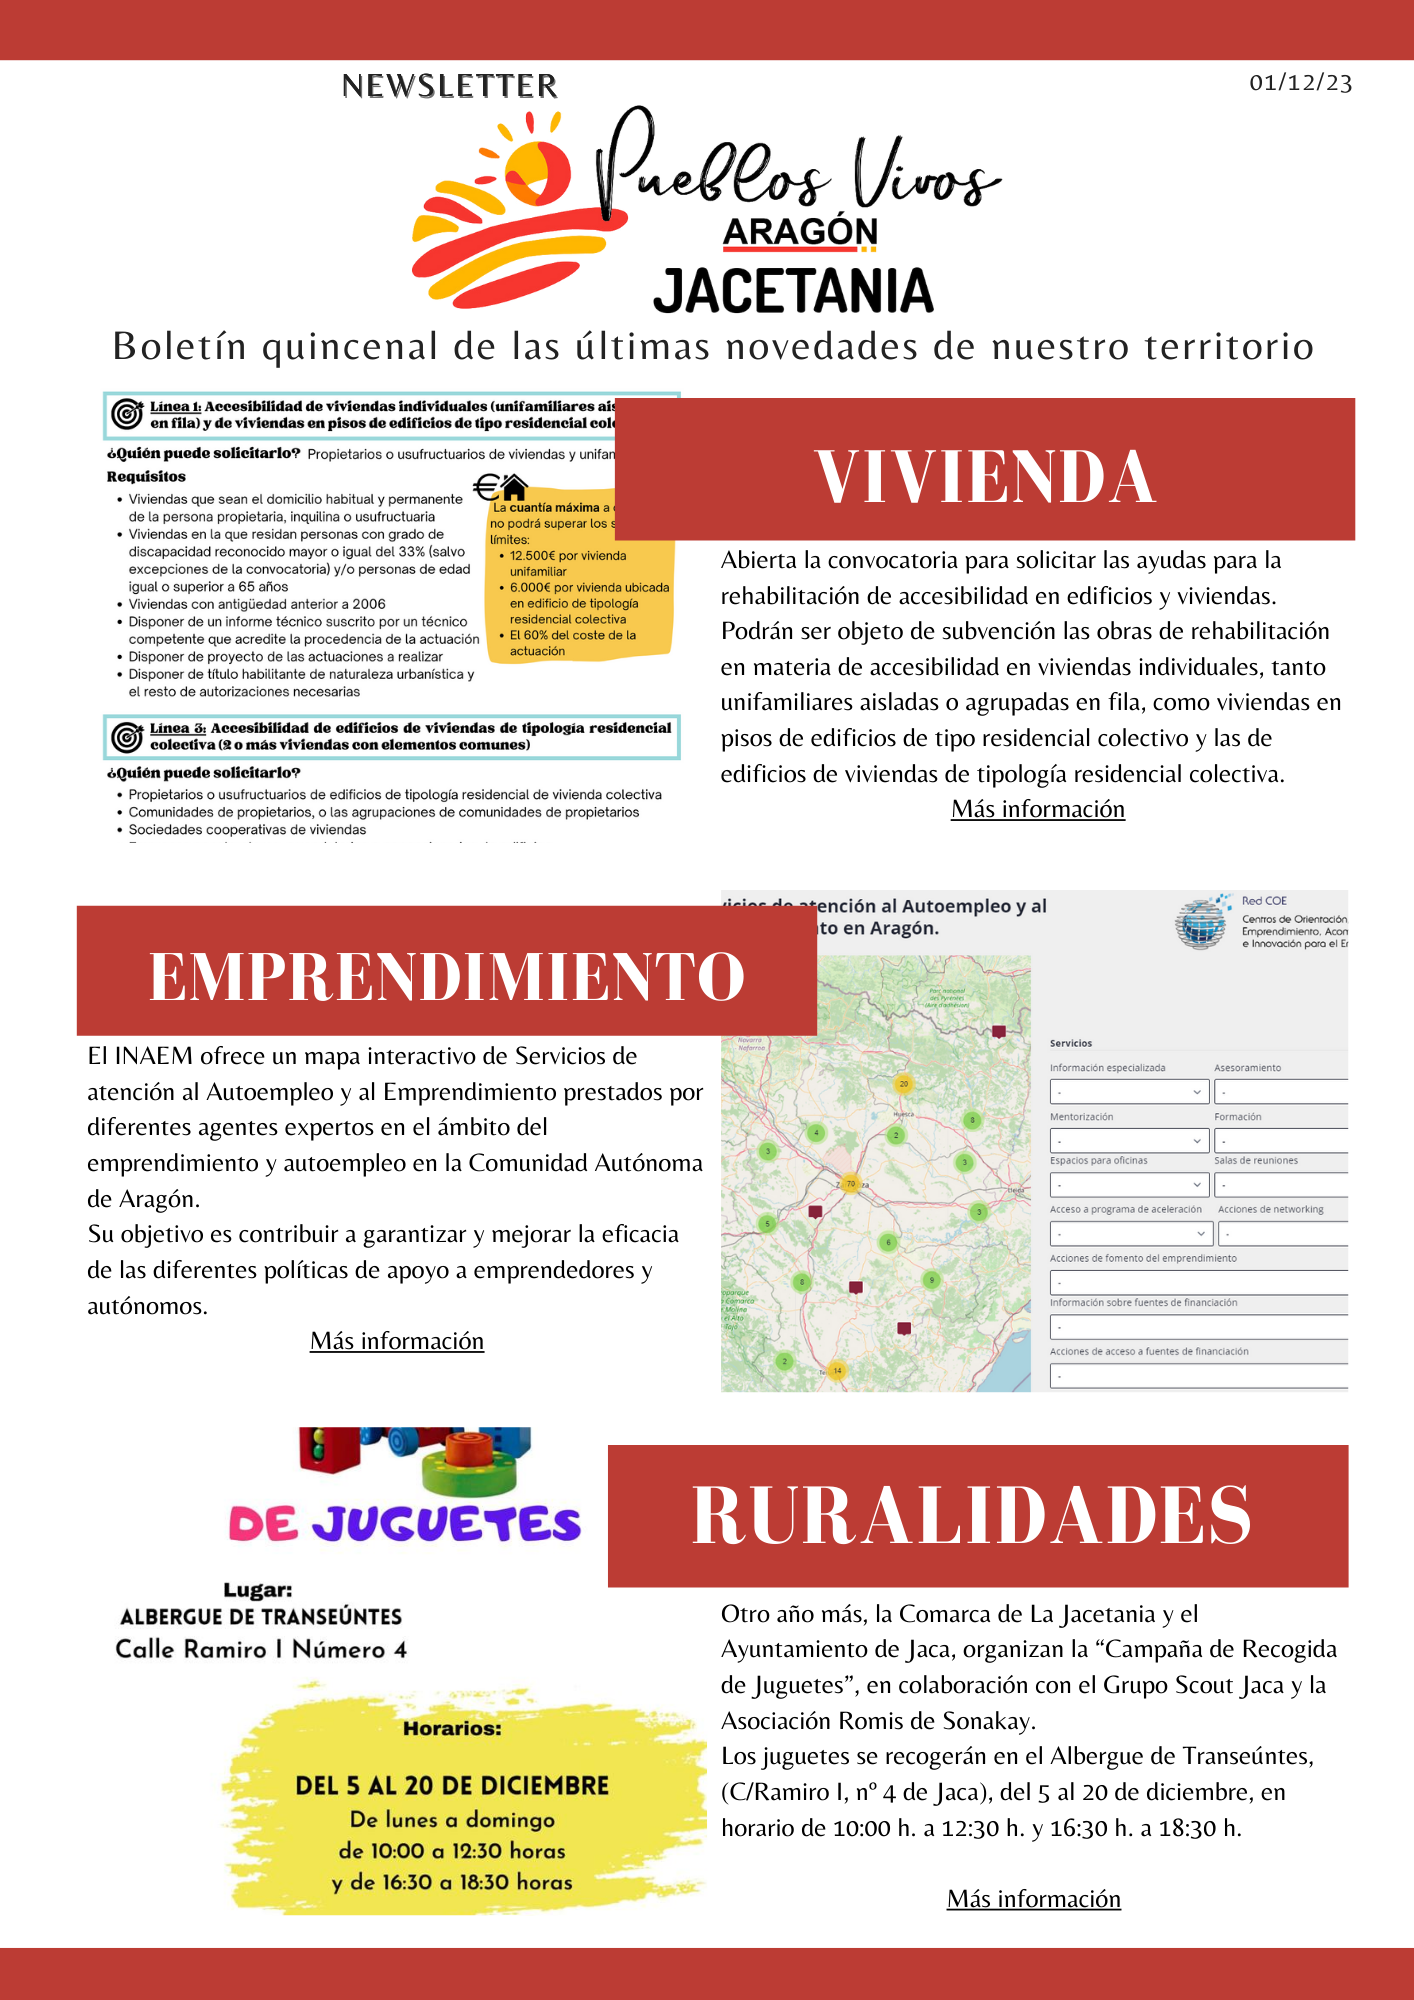 Newsletter PUEBLOS VIVOS JACETANIA